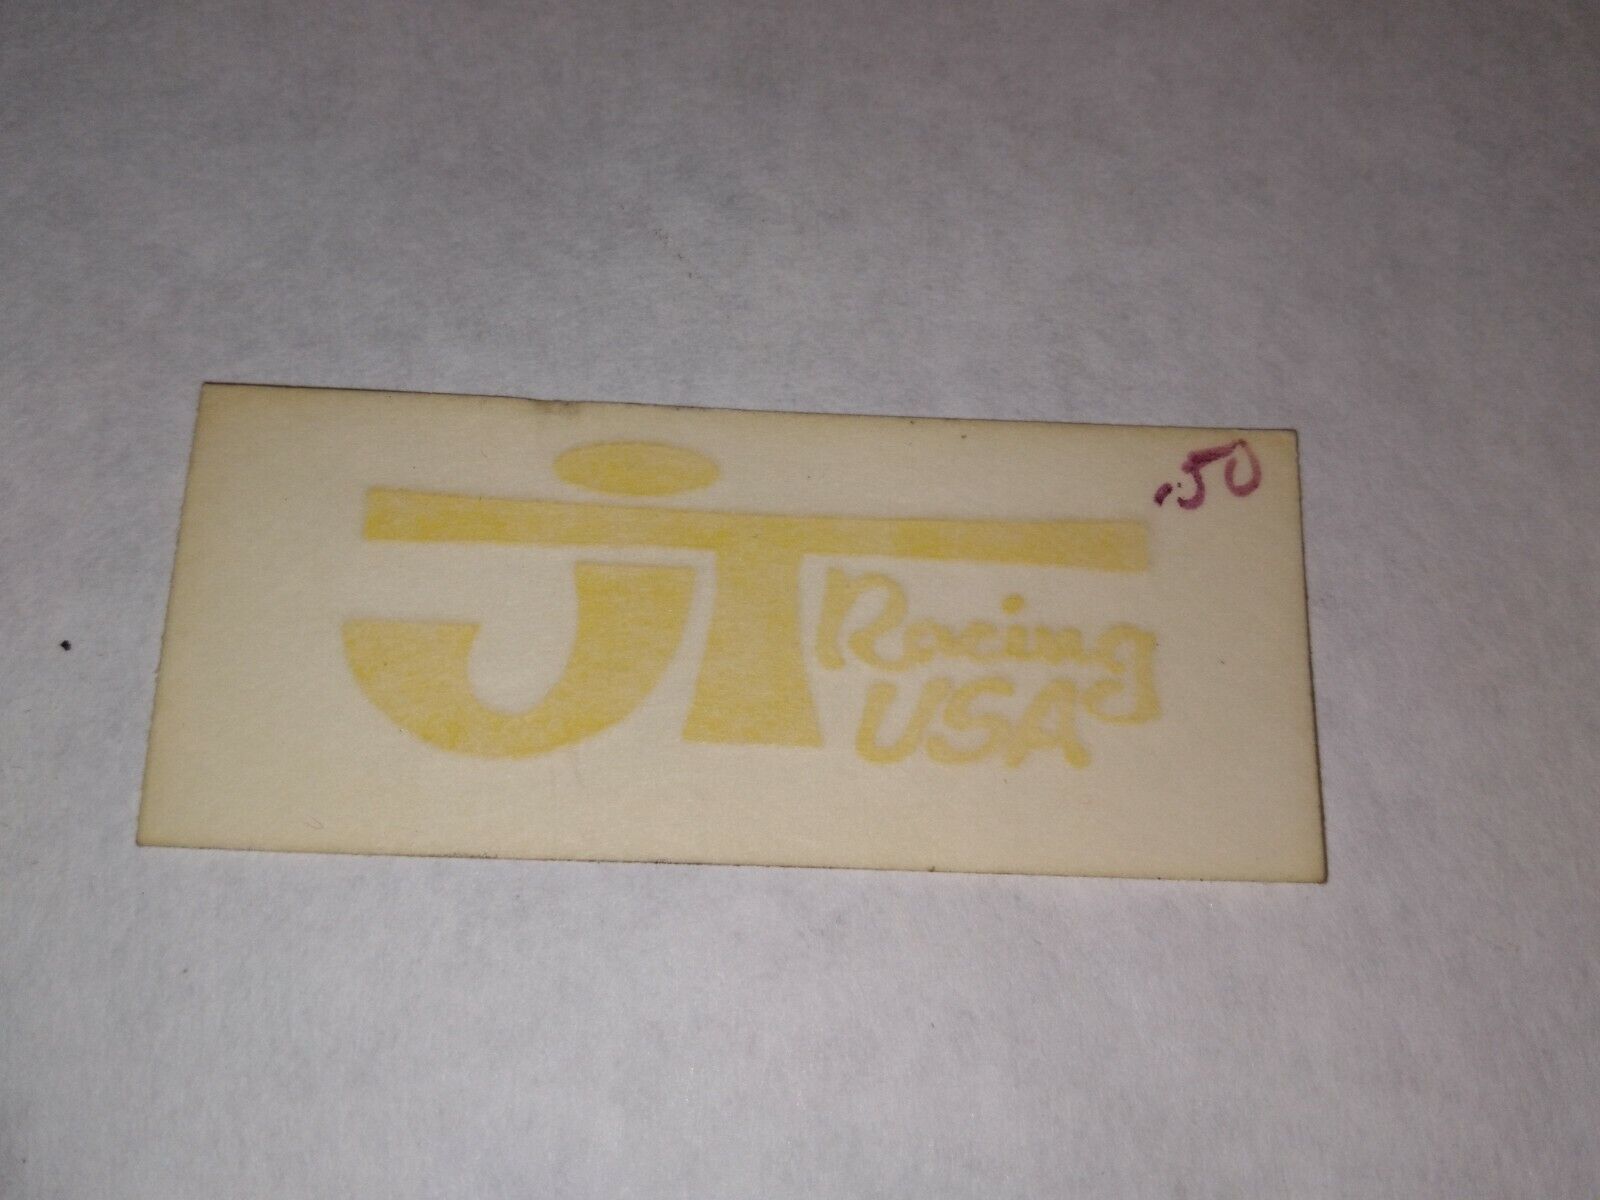 NOS vintage original JT Racing sticker decal rub on BMX old school yellow small